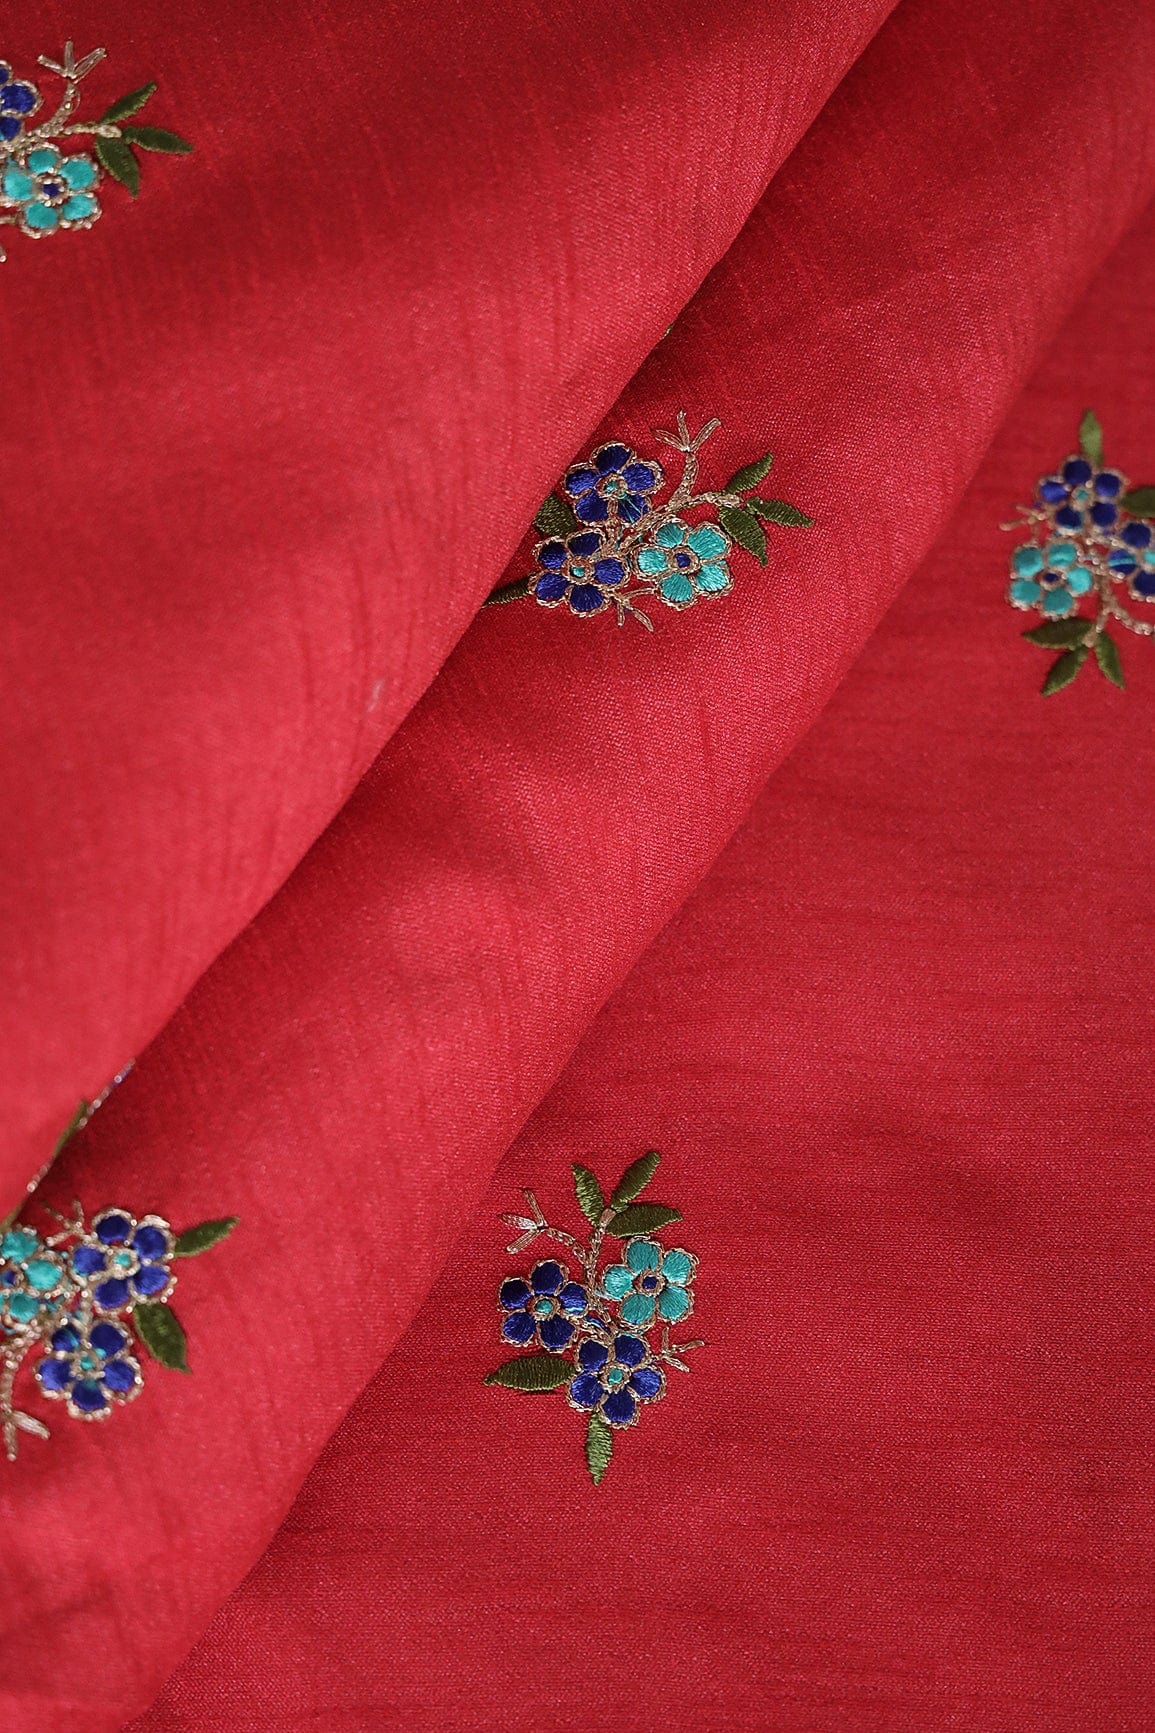 doeraa Banarasi Fabrics Multi Thread With Gold Zari Small Floral Embroidery Work On Red Banglori Satin Fabric